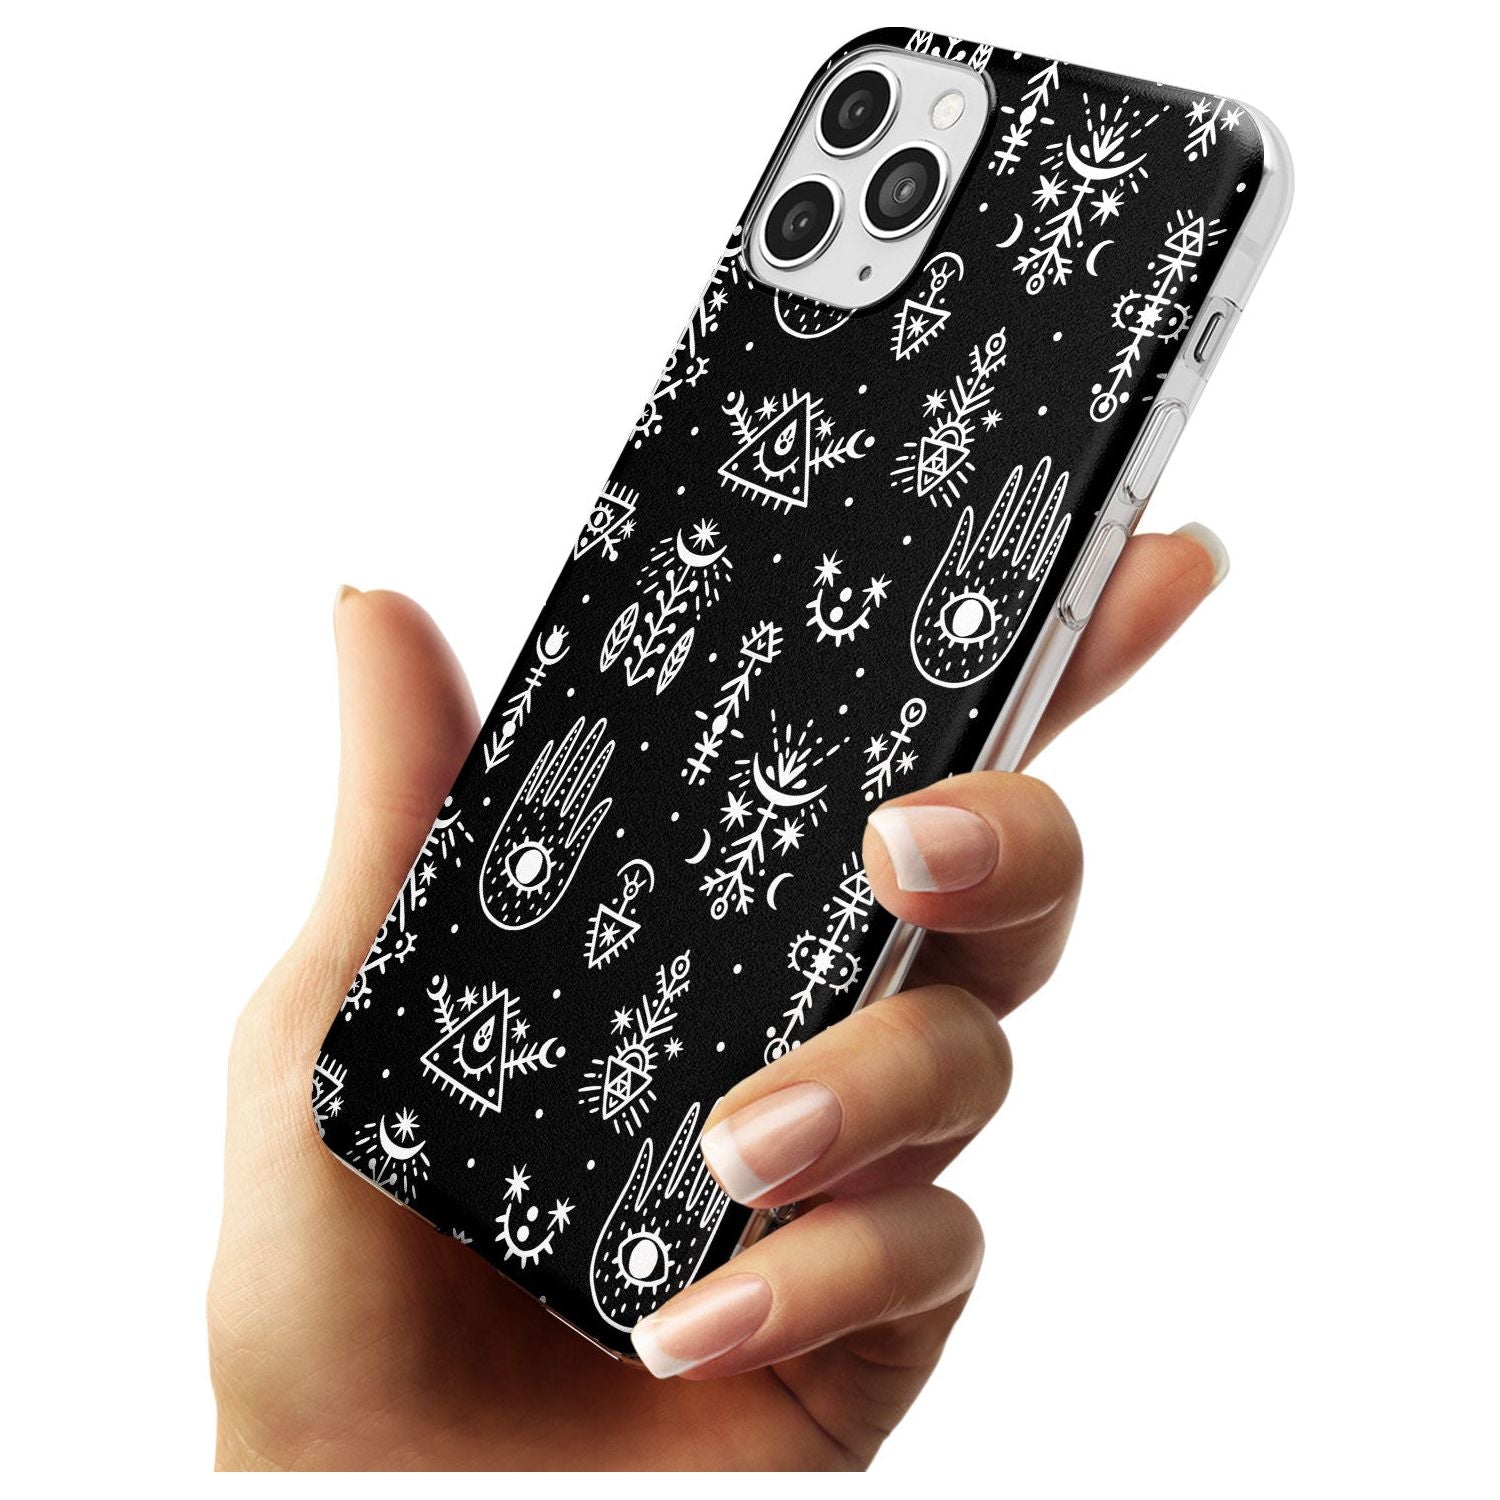 Tribal Palms - White on Black Slim TPU Phone Case for iPhone 11 Pro Max